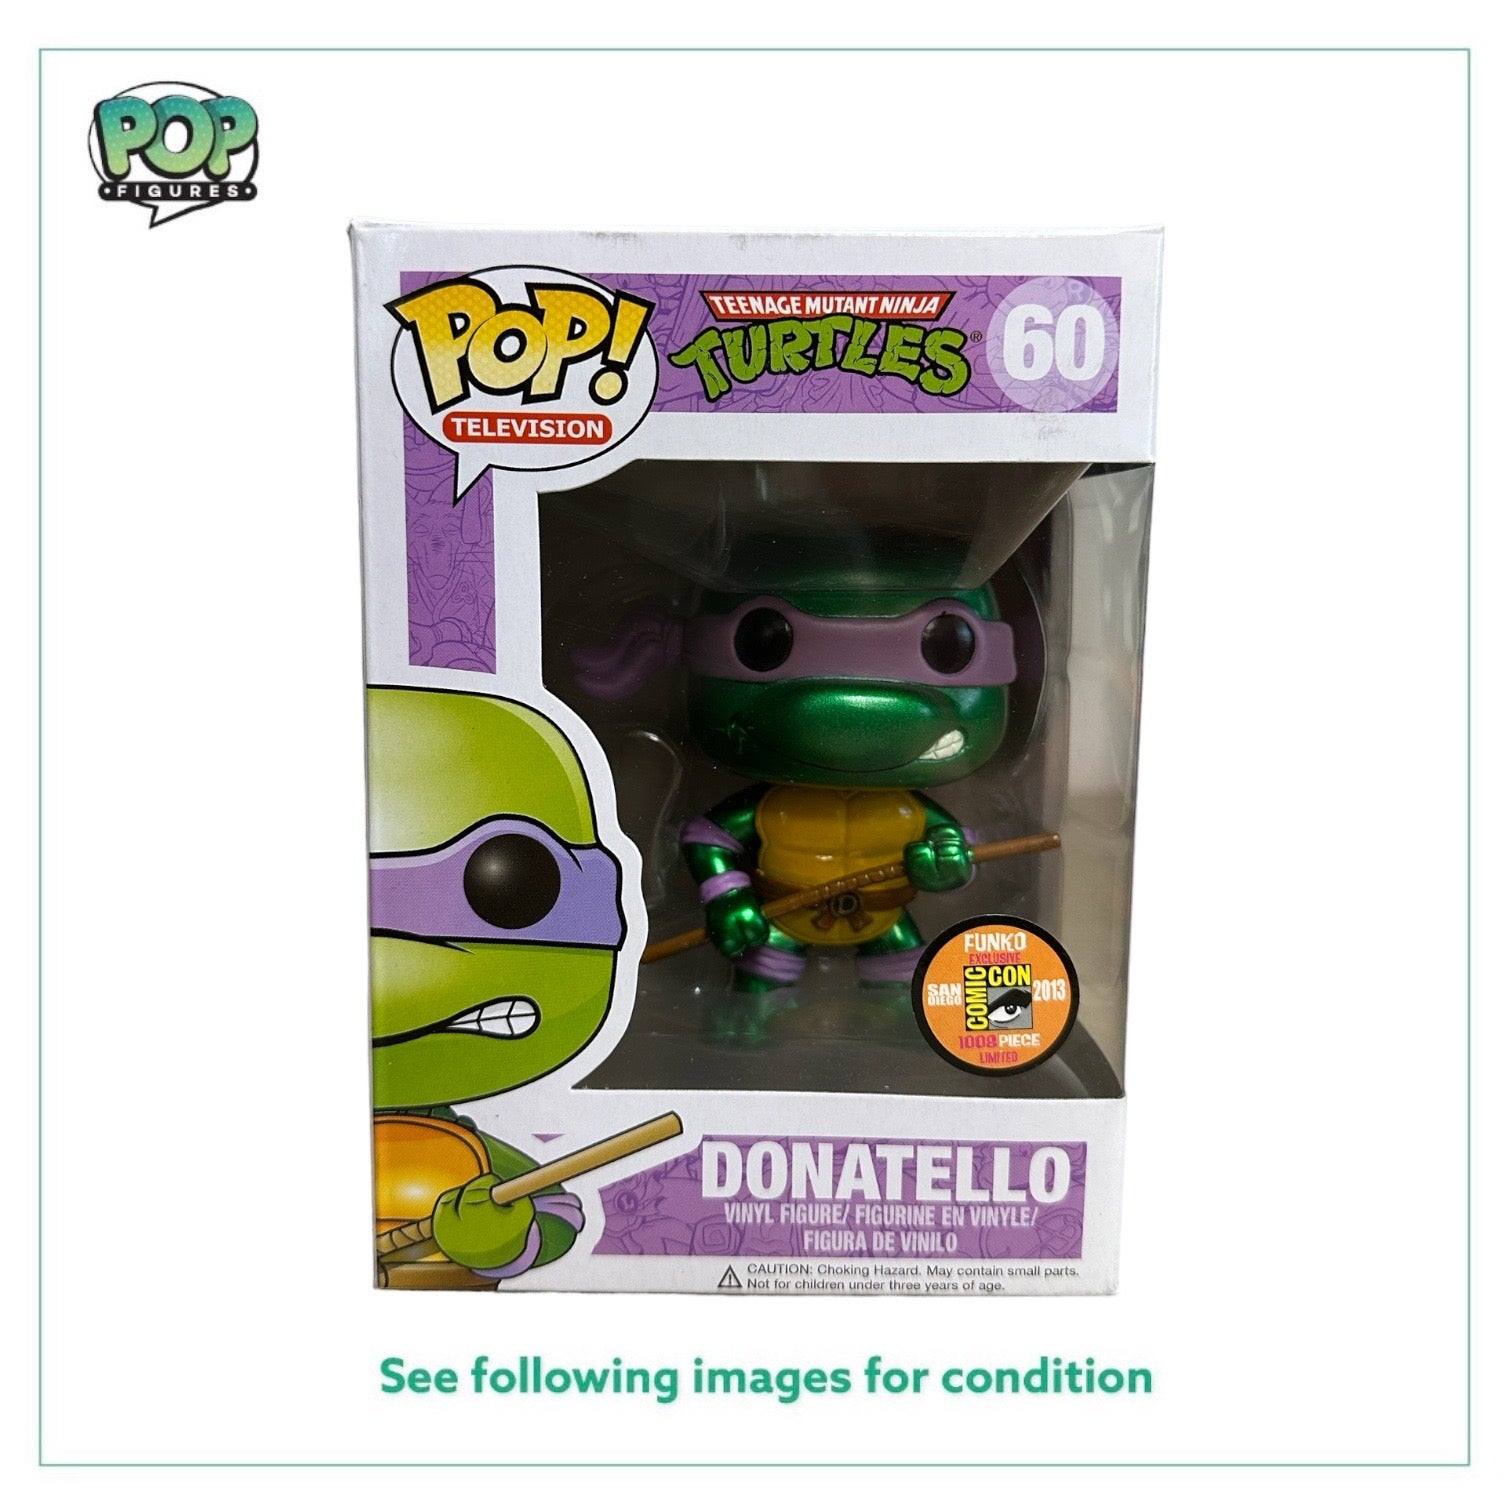 Donatello #60 (Metallic) Funko Pop! - Teenage Mutant Ninja Turtles - SDCC 2013 Exclusive LE1008 Pcs - Condition 8.5/10